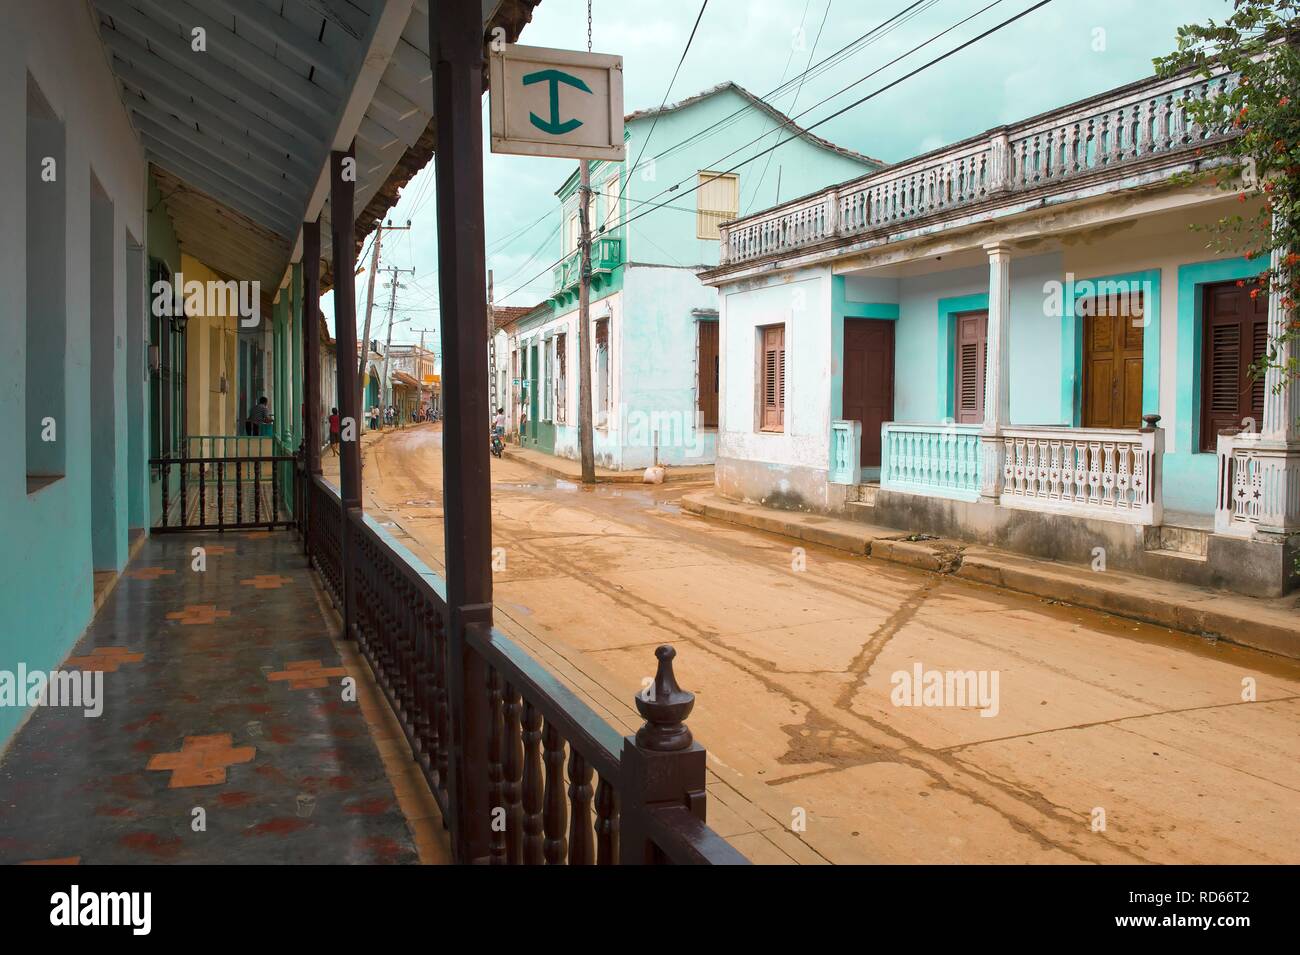 Maisons coloniales, Baracoa, province de Guantanamo, Cuba Banque D'Images